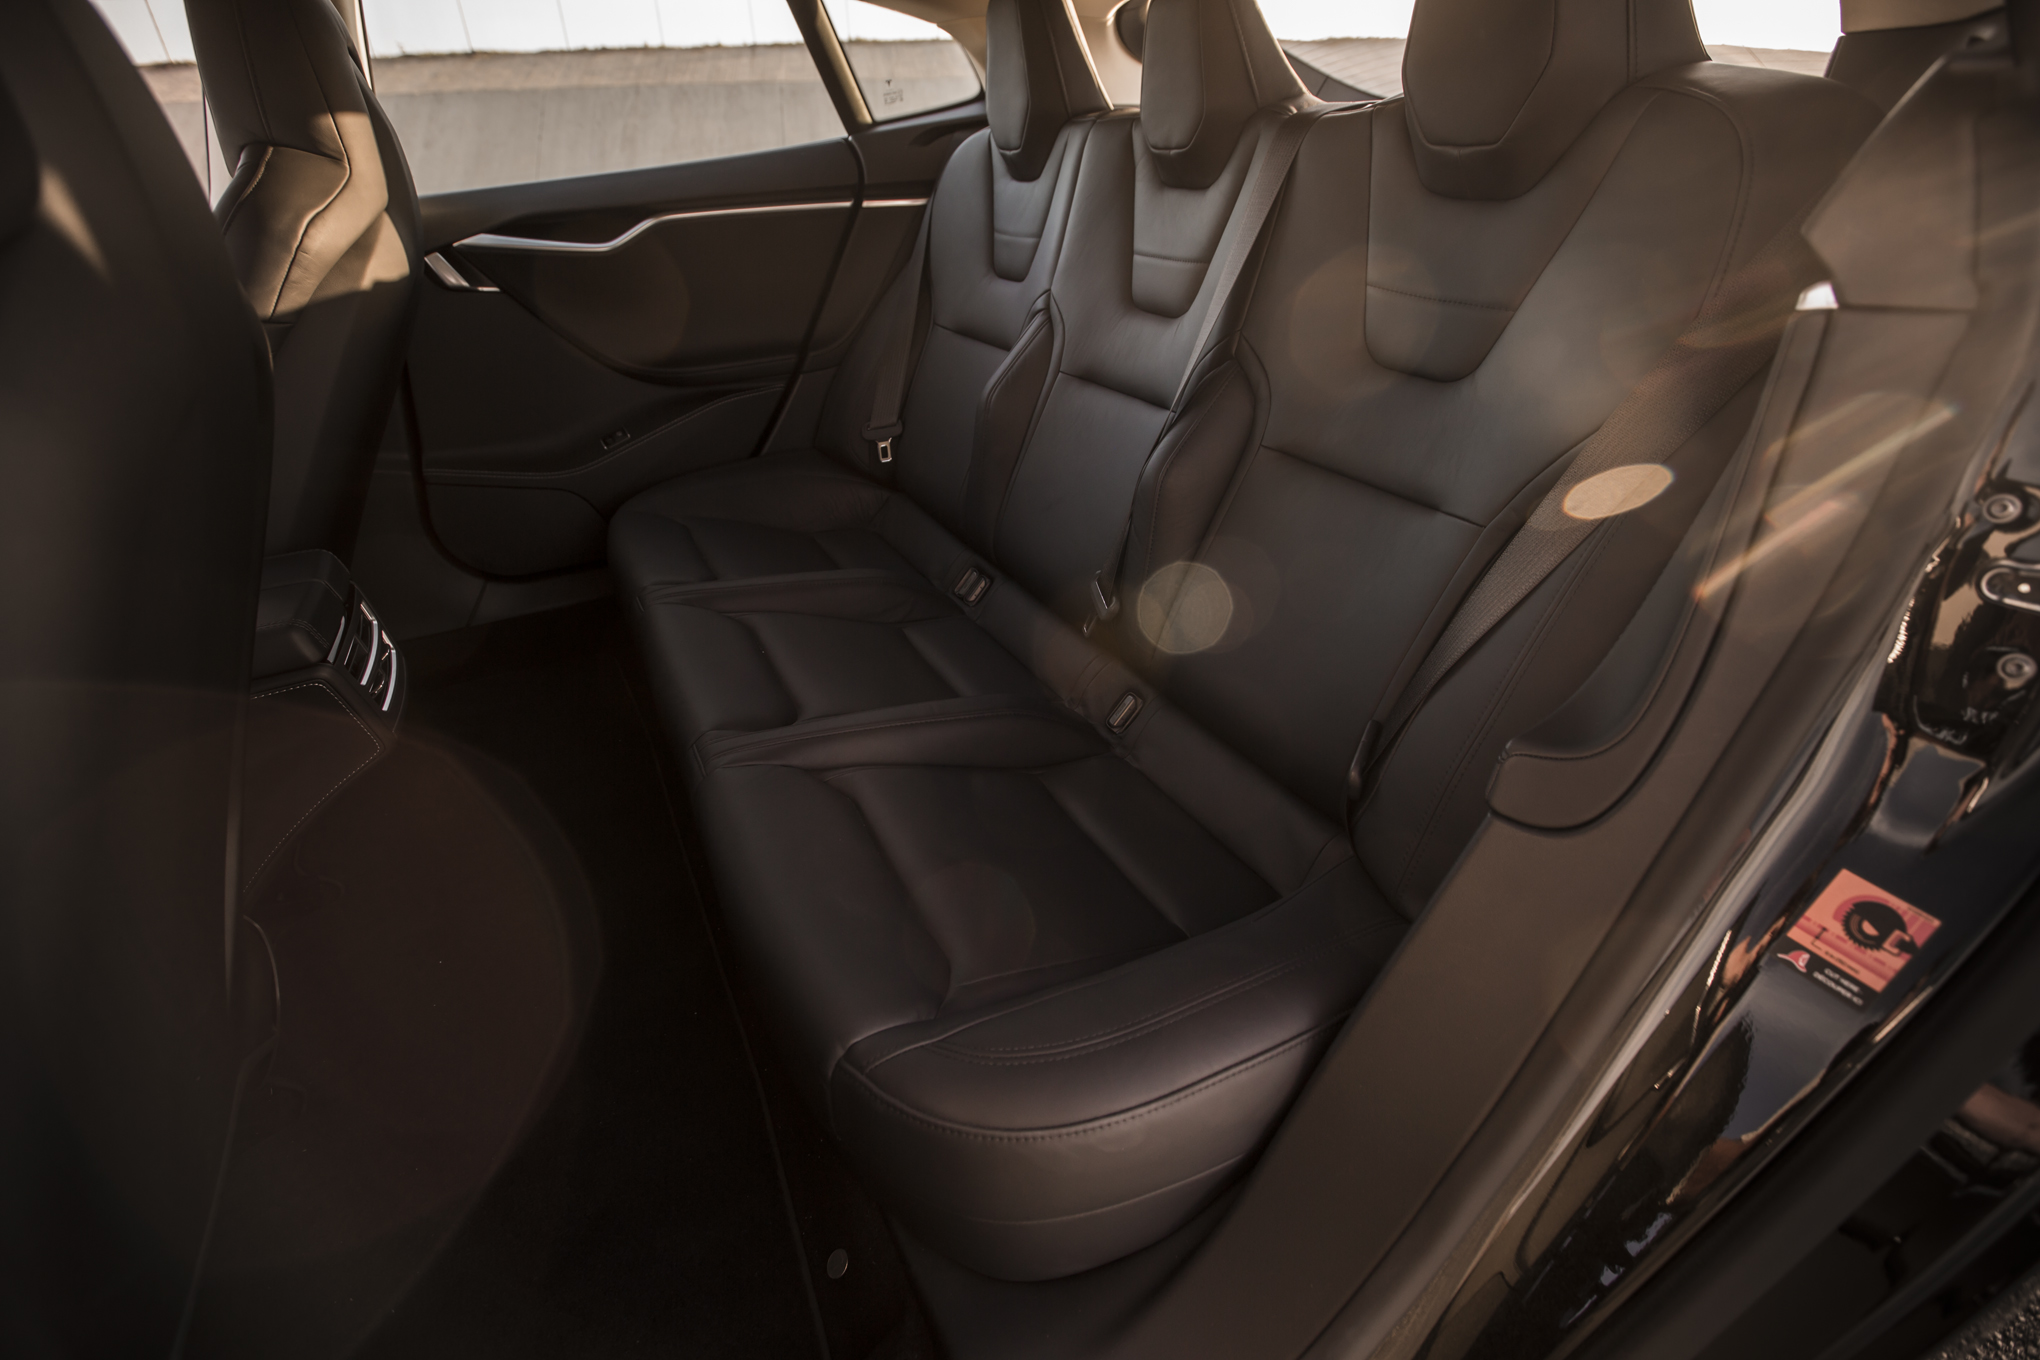 2015-tesla-model-s-p85d-rear-interior-seats.jpg